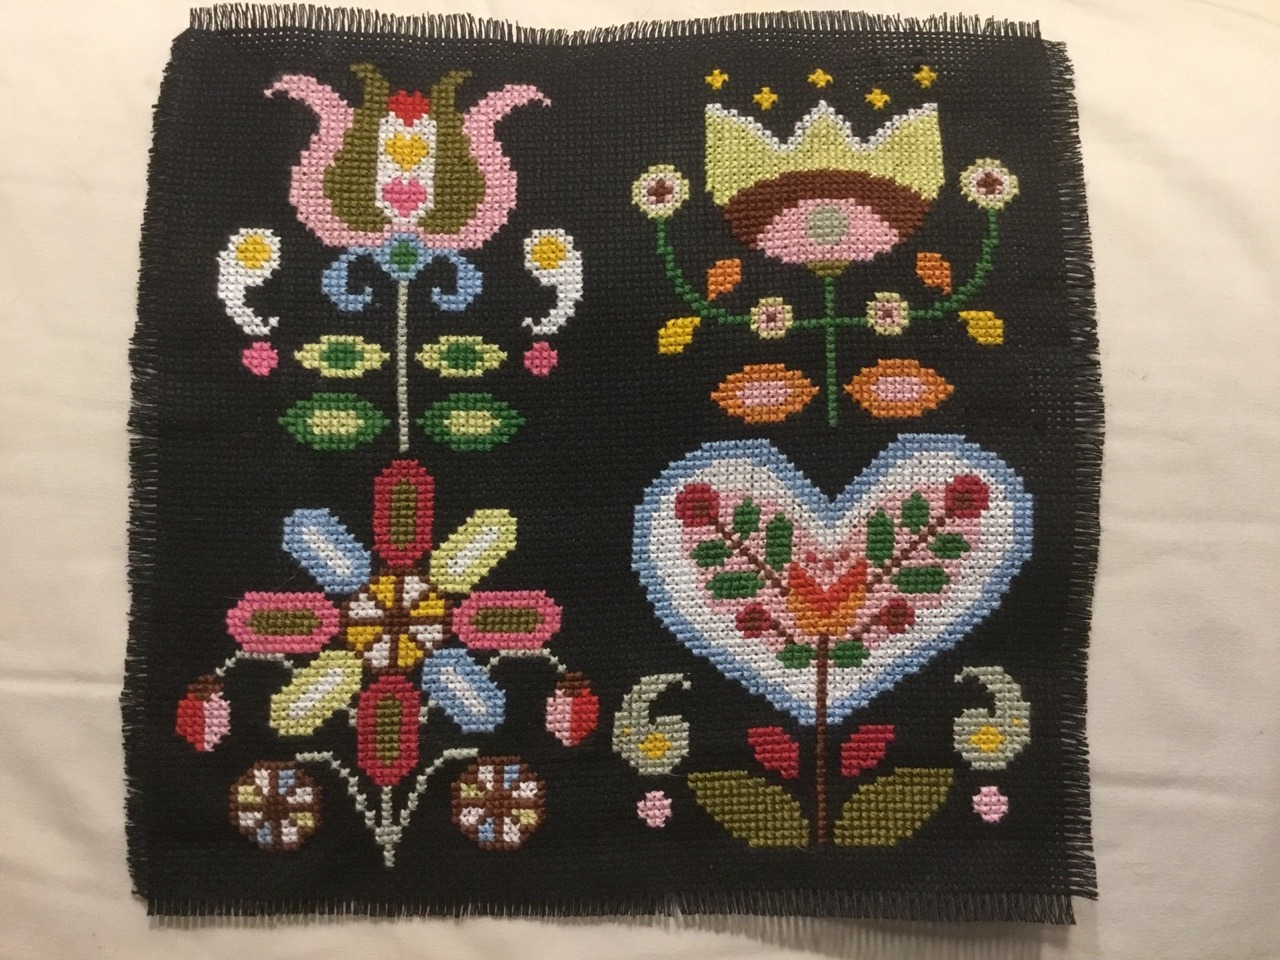 Slovak Embroidery Patterns Folk Embroidery Tumblr